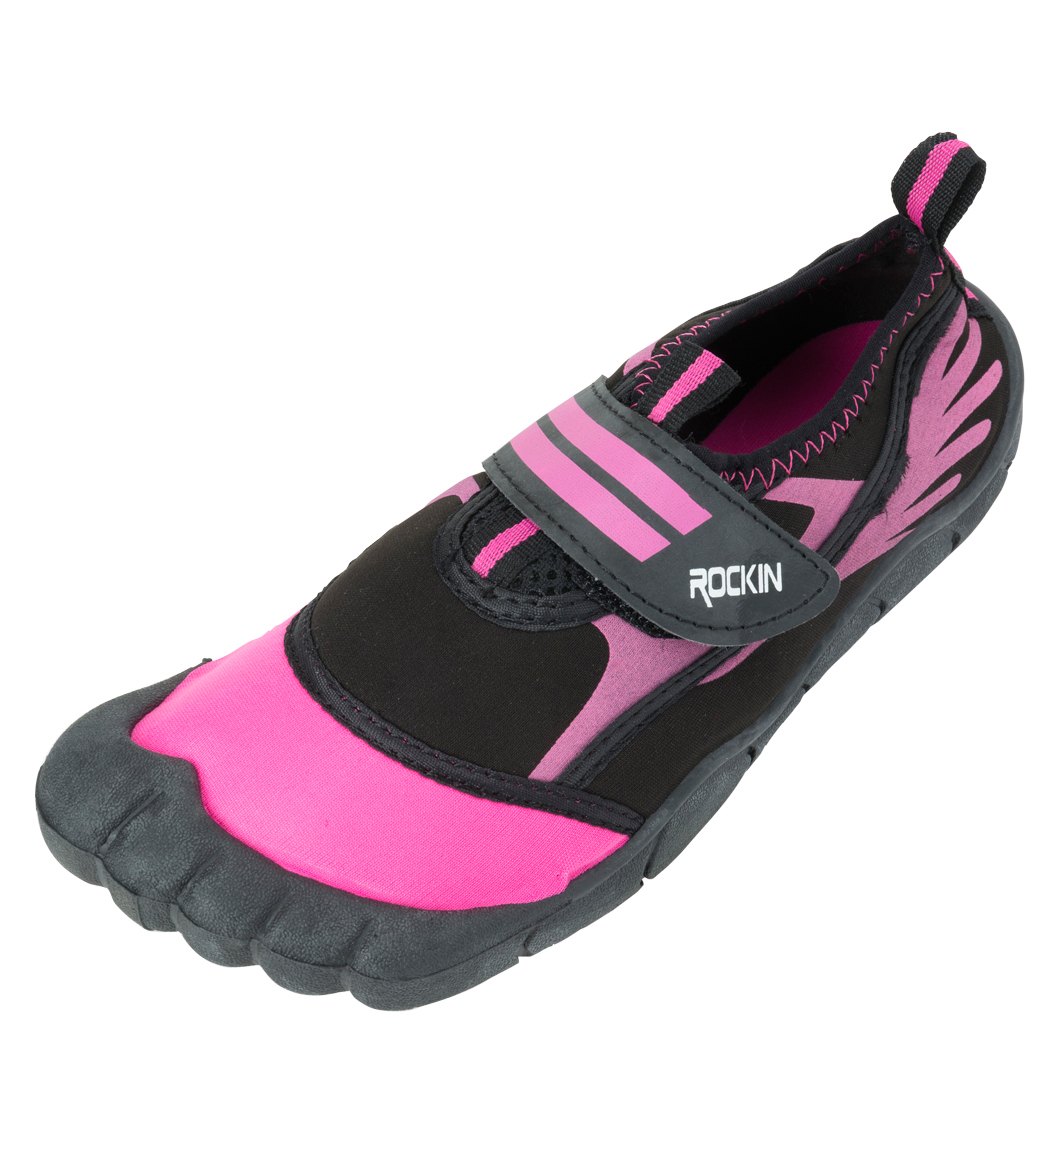 Rockin Footwear Women's Aqua Foot Water Shoes at SwimOutlet.com